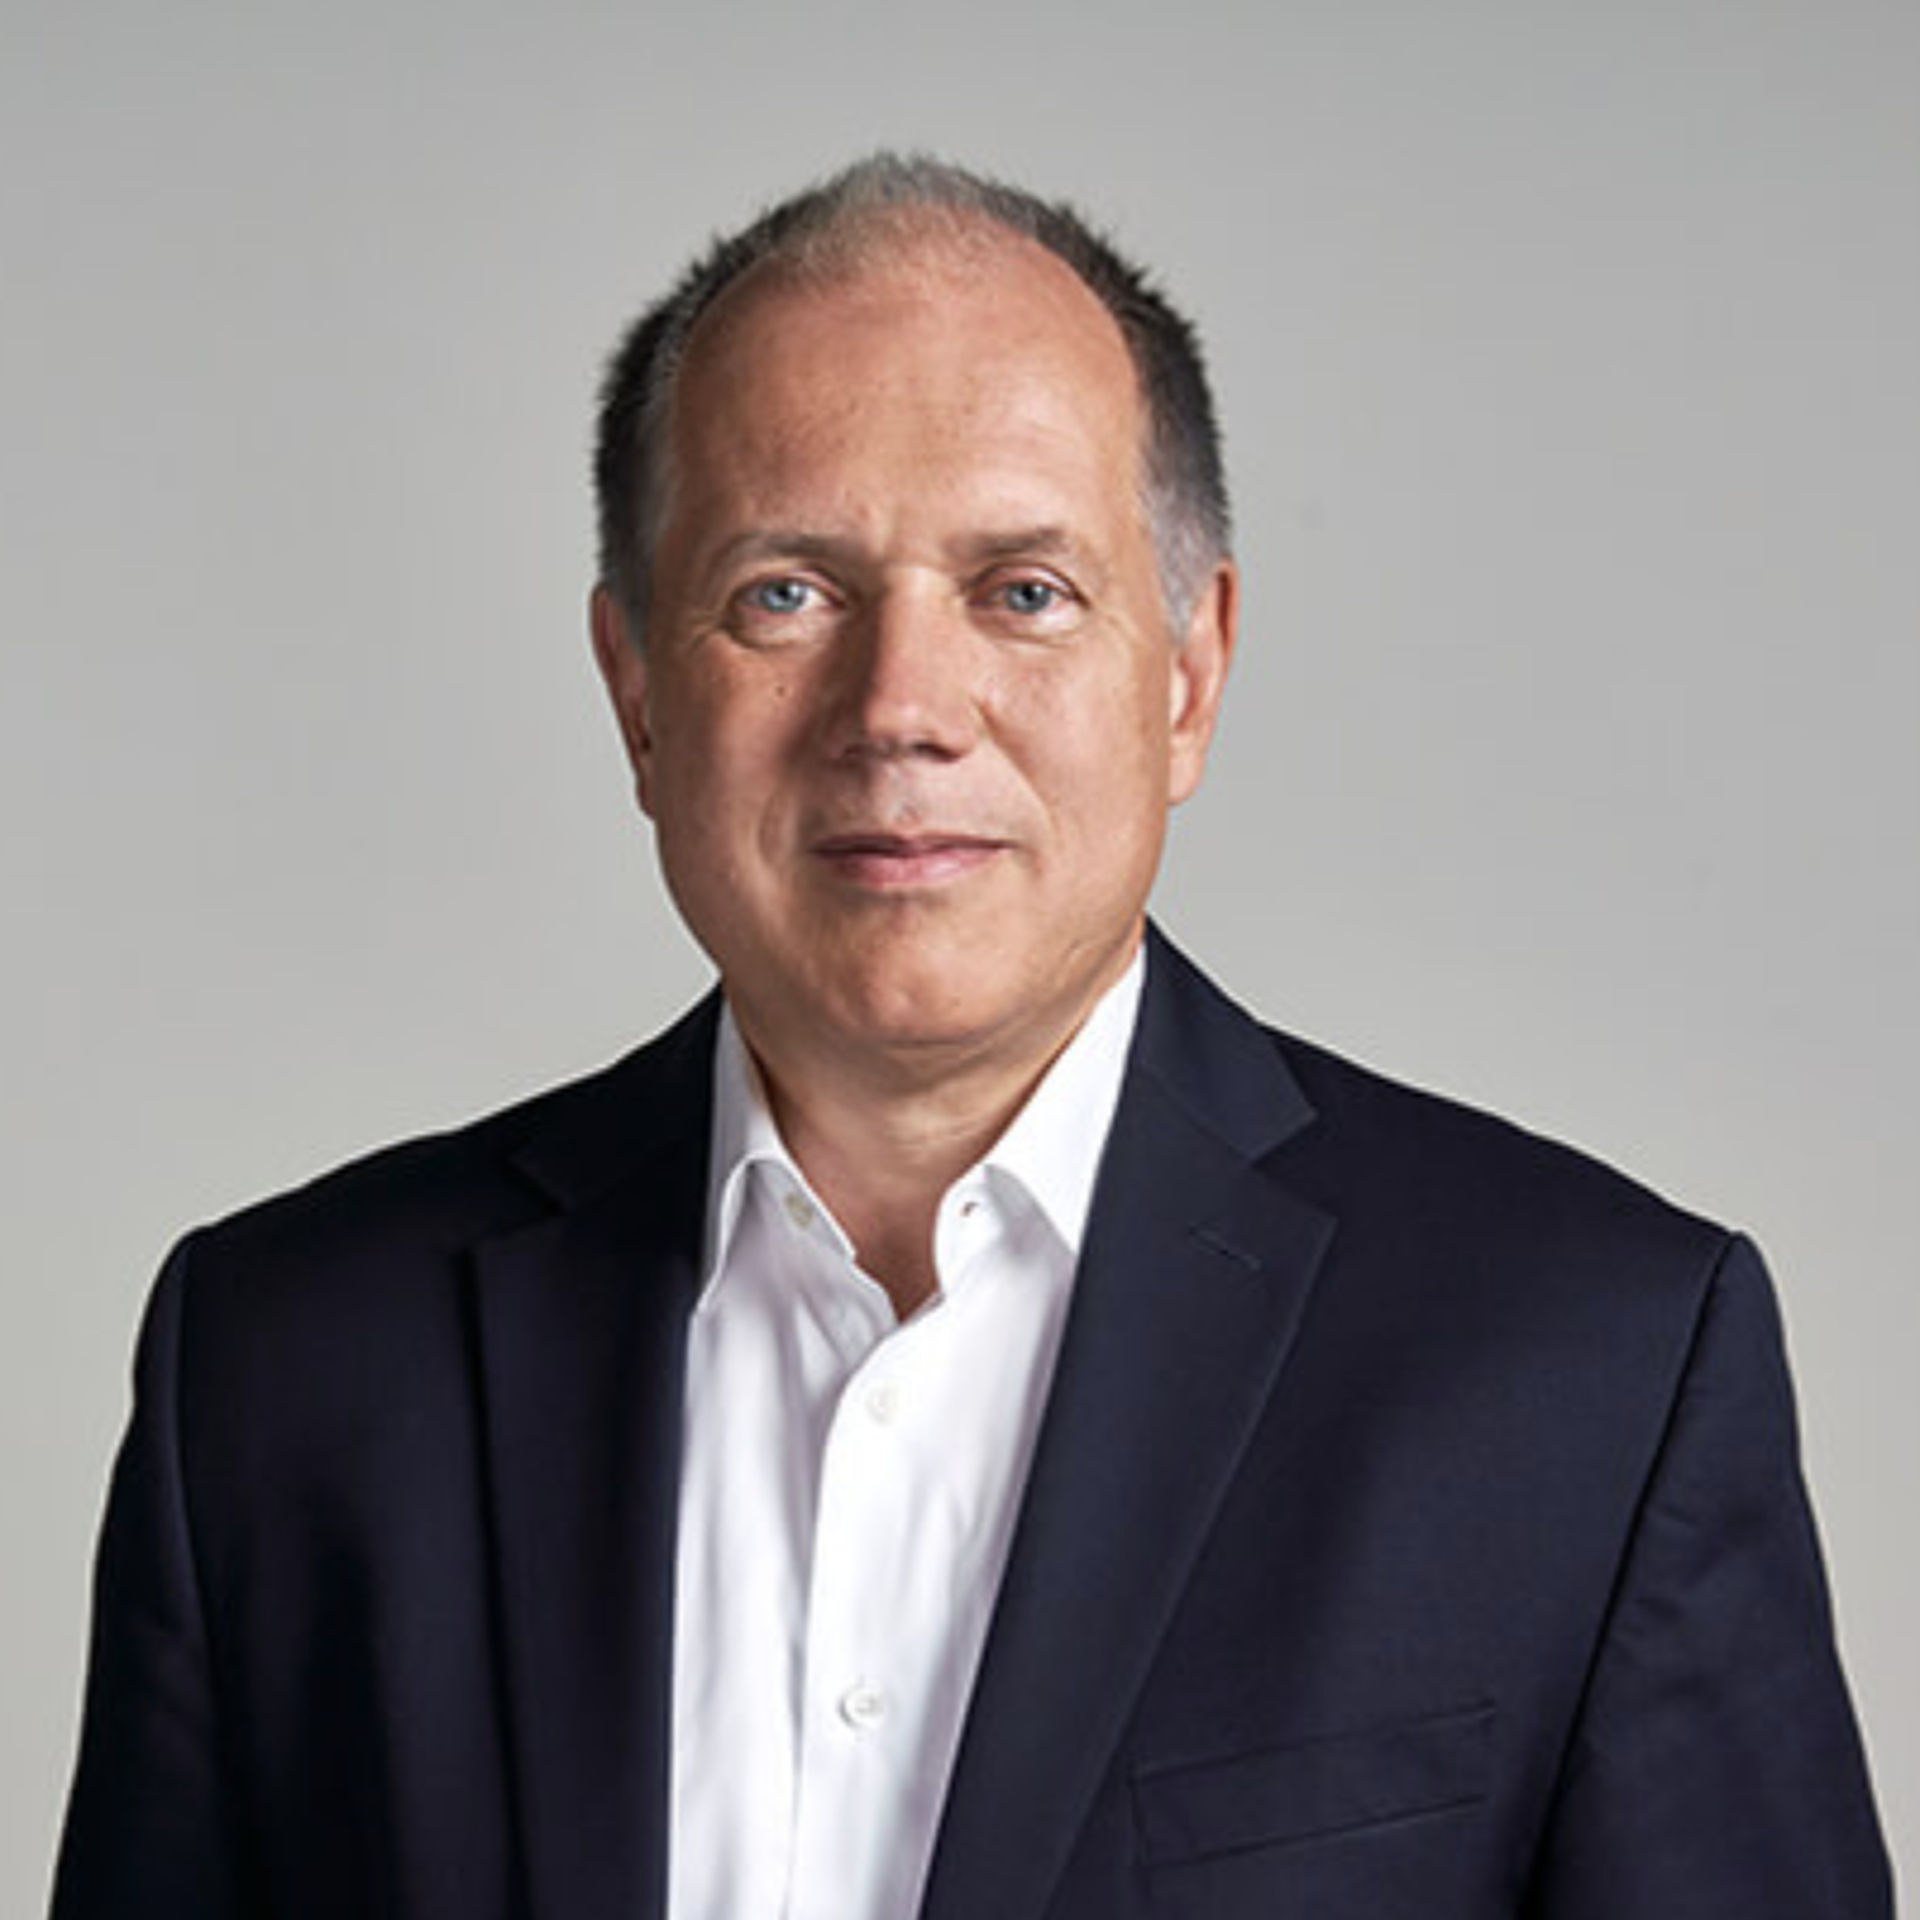 Accenture&#8217;s Frank Riemensperger